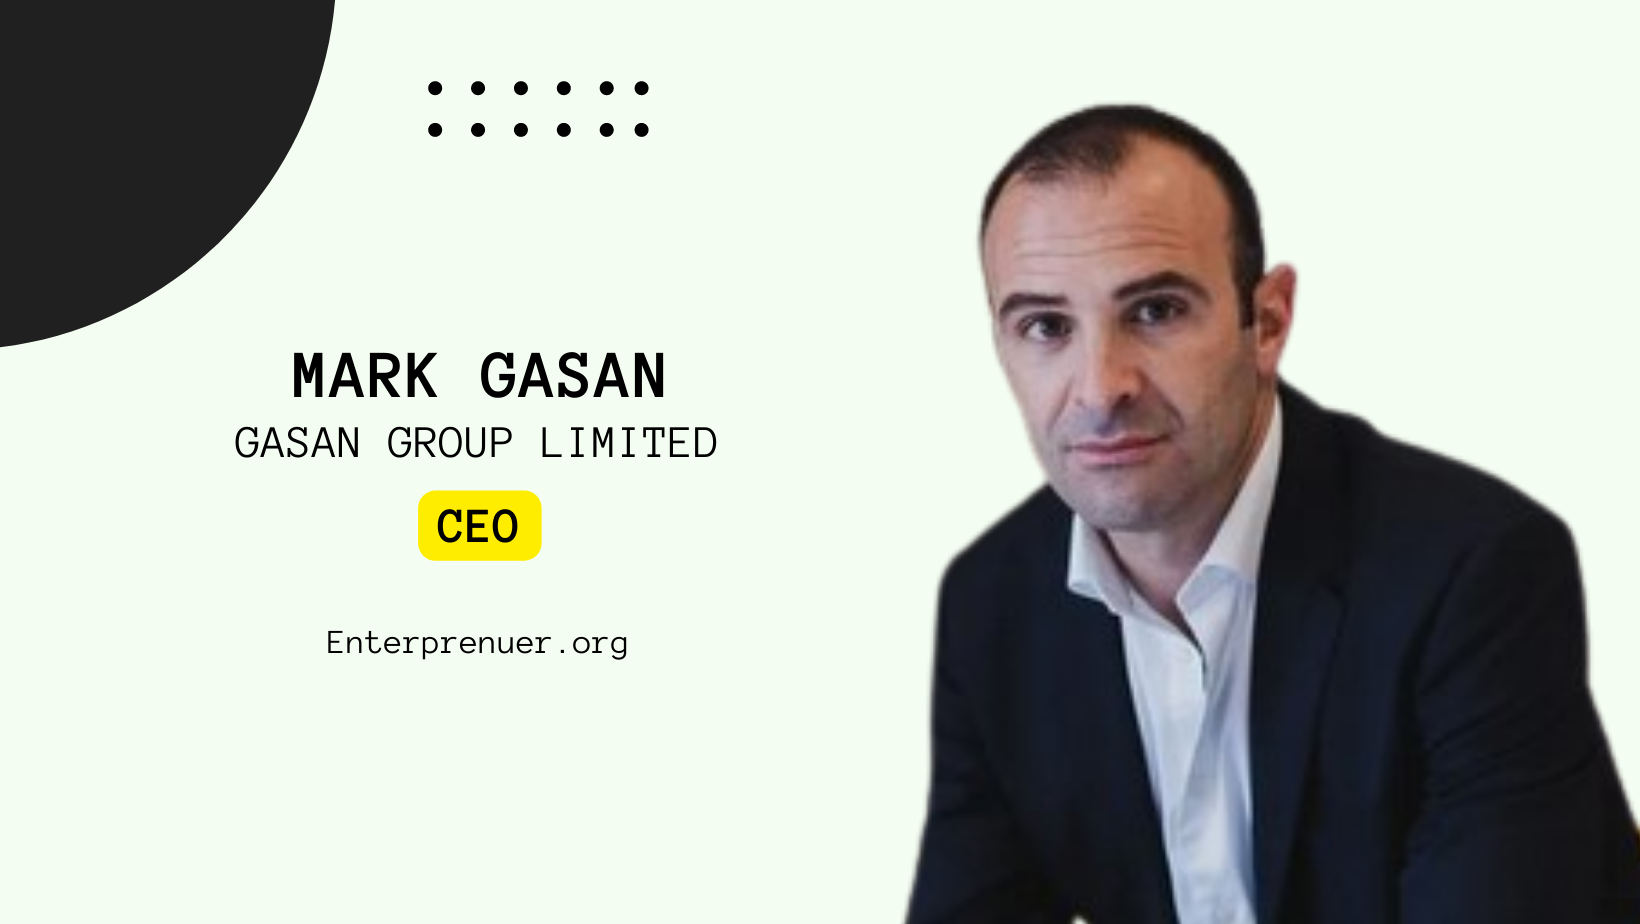 Mark Gasan CEO of Gasan Group Limited